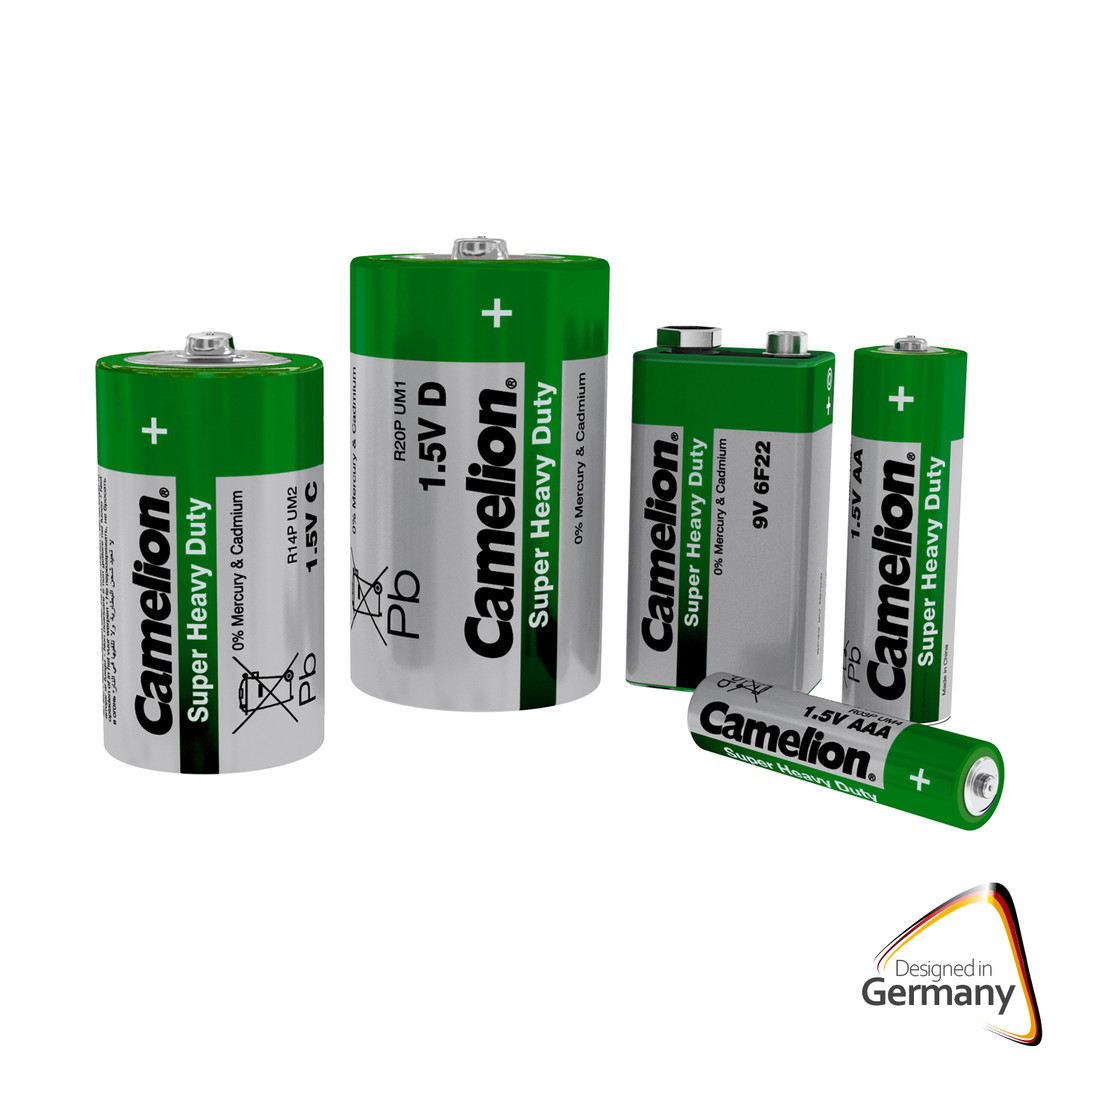 Camelion 9V Super Heavy Duty 6pk – Batteries 4 Stores